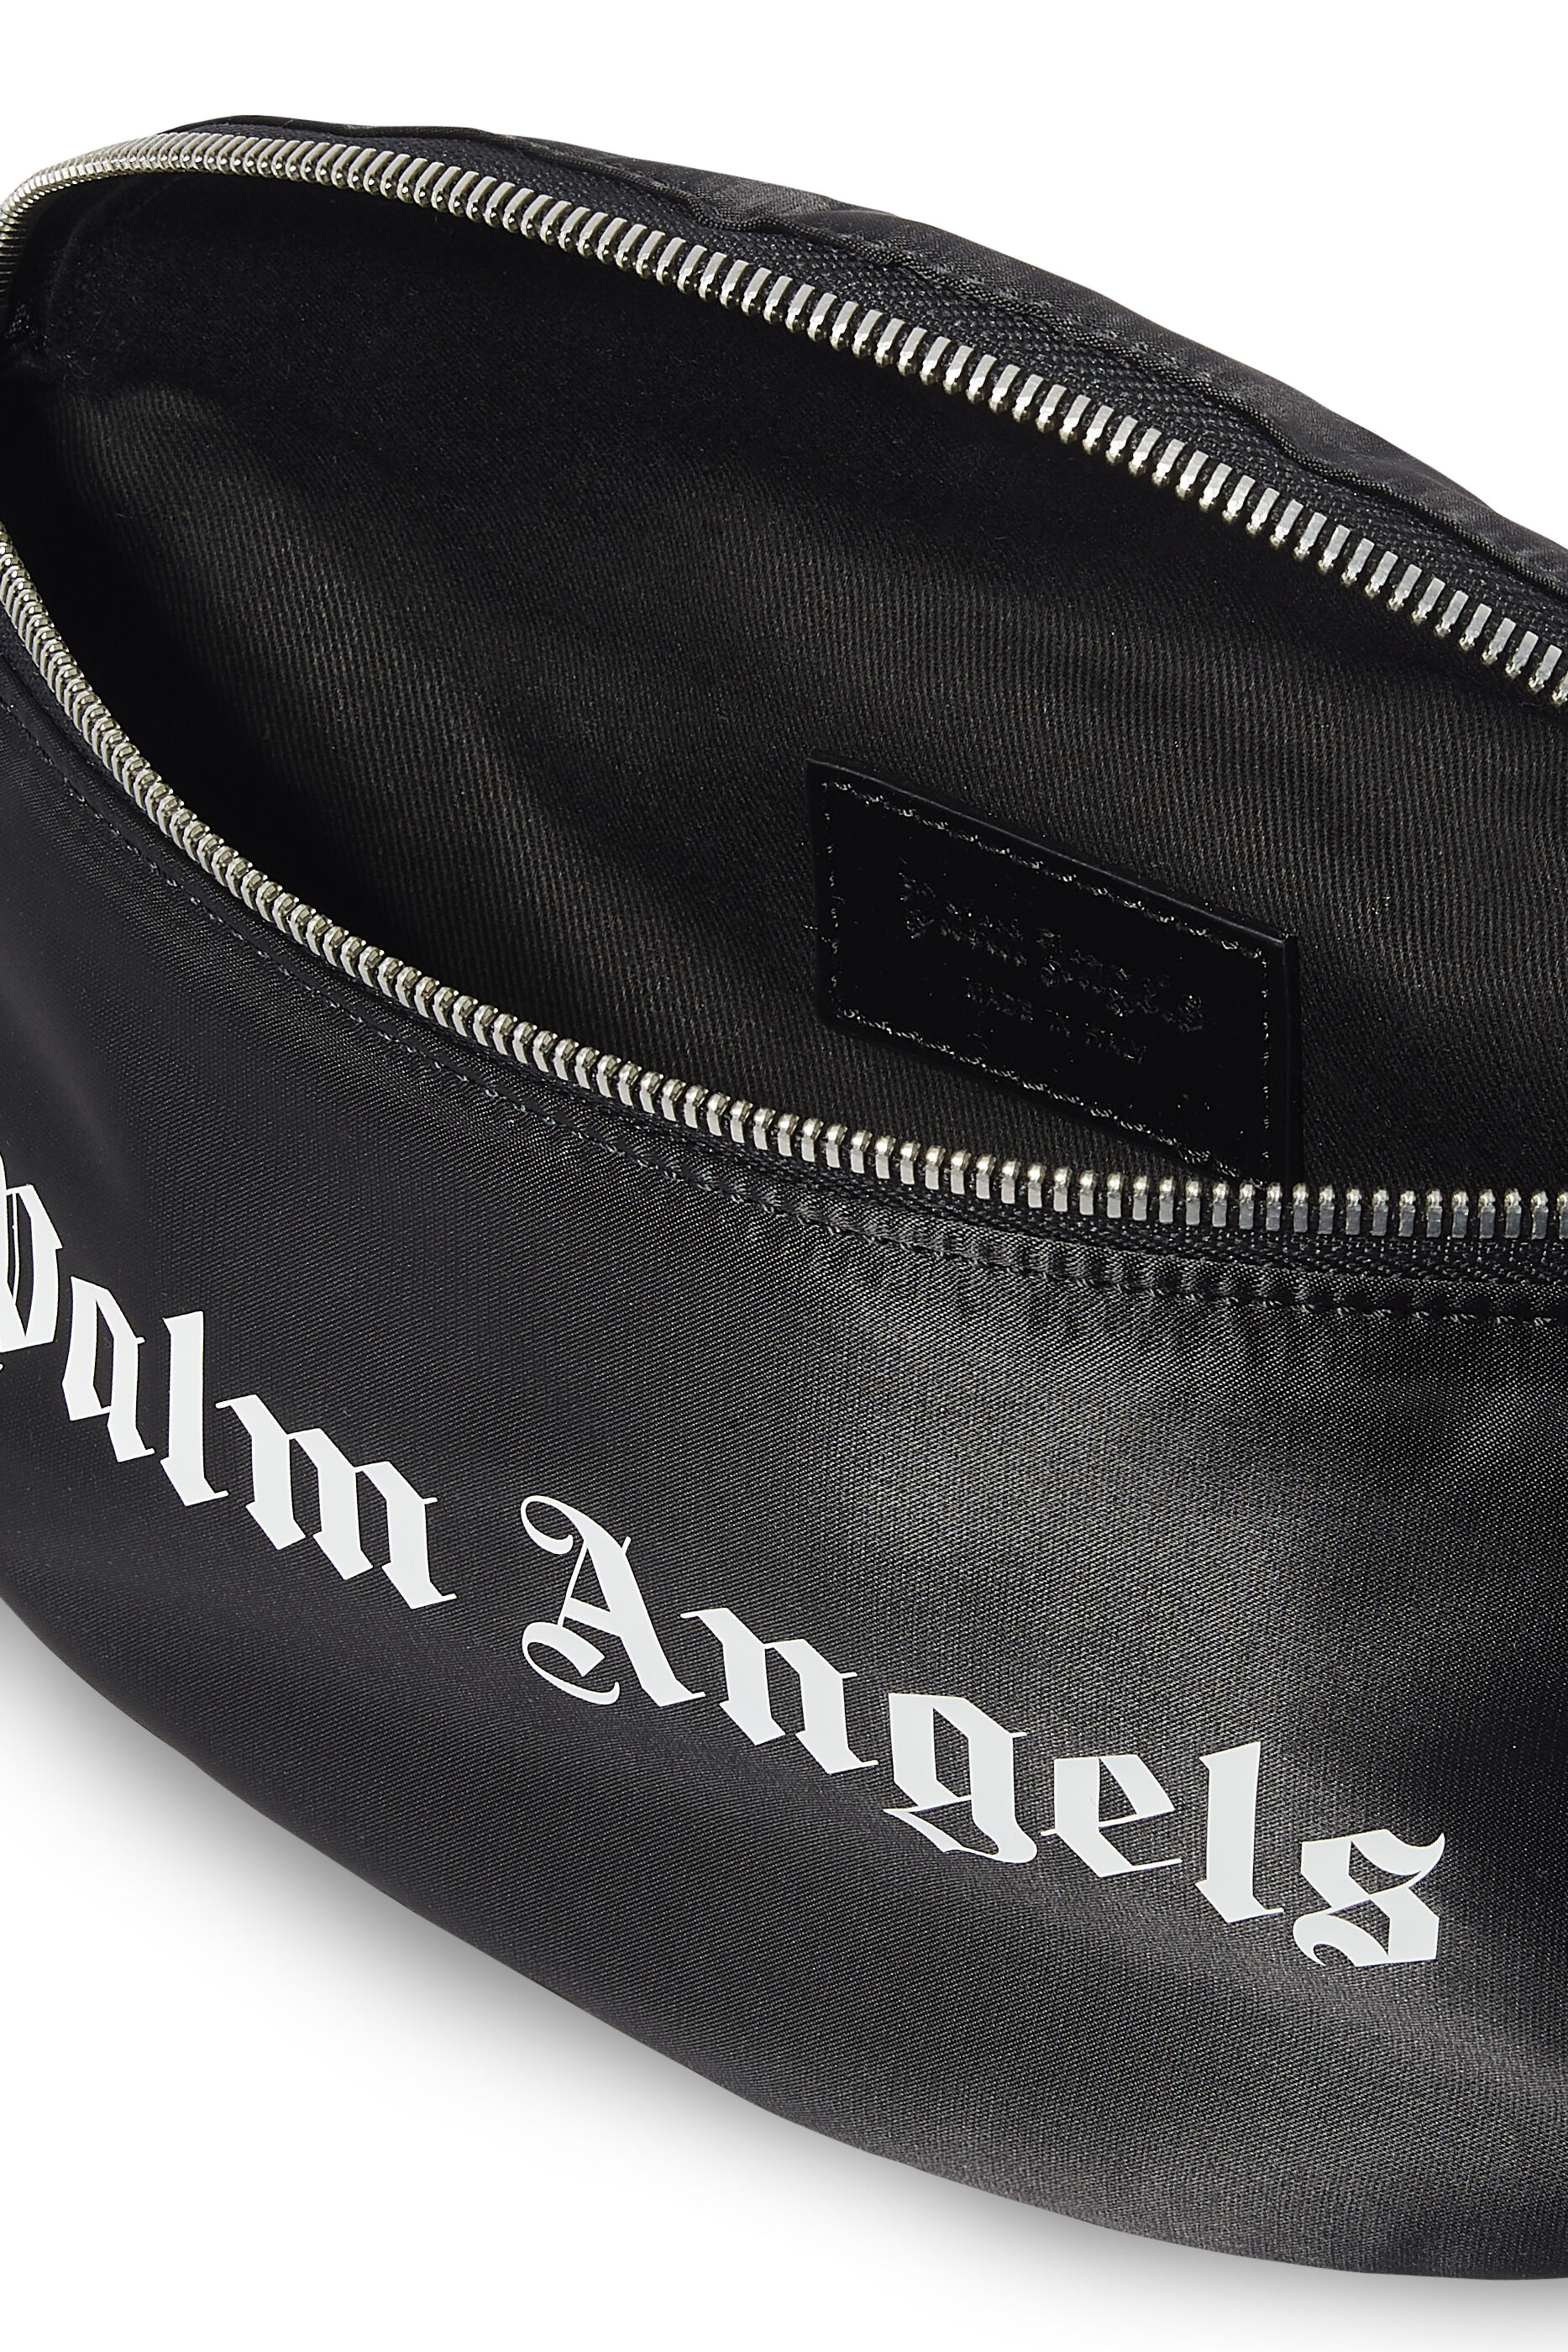 Palm Angels Handbag PALM BEACH SMALL with decorative gems in black